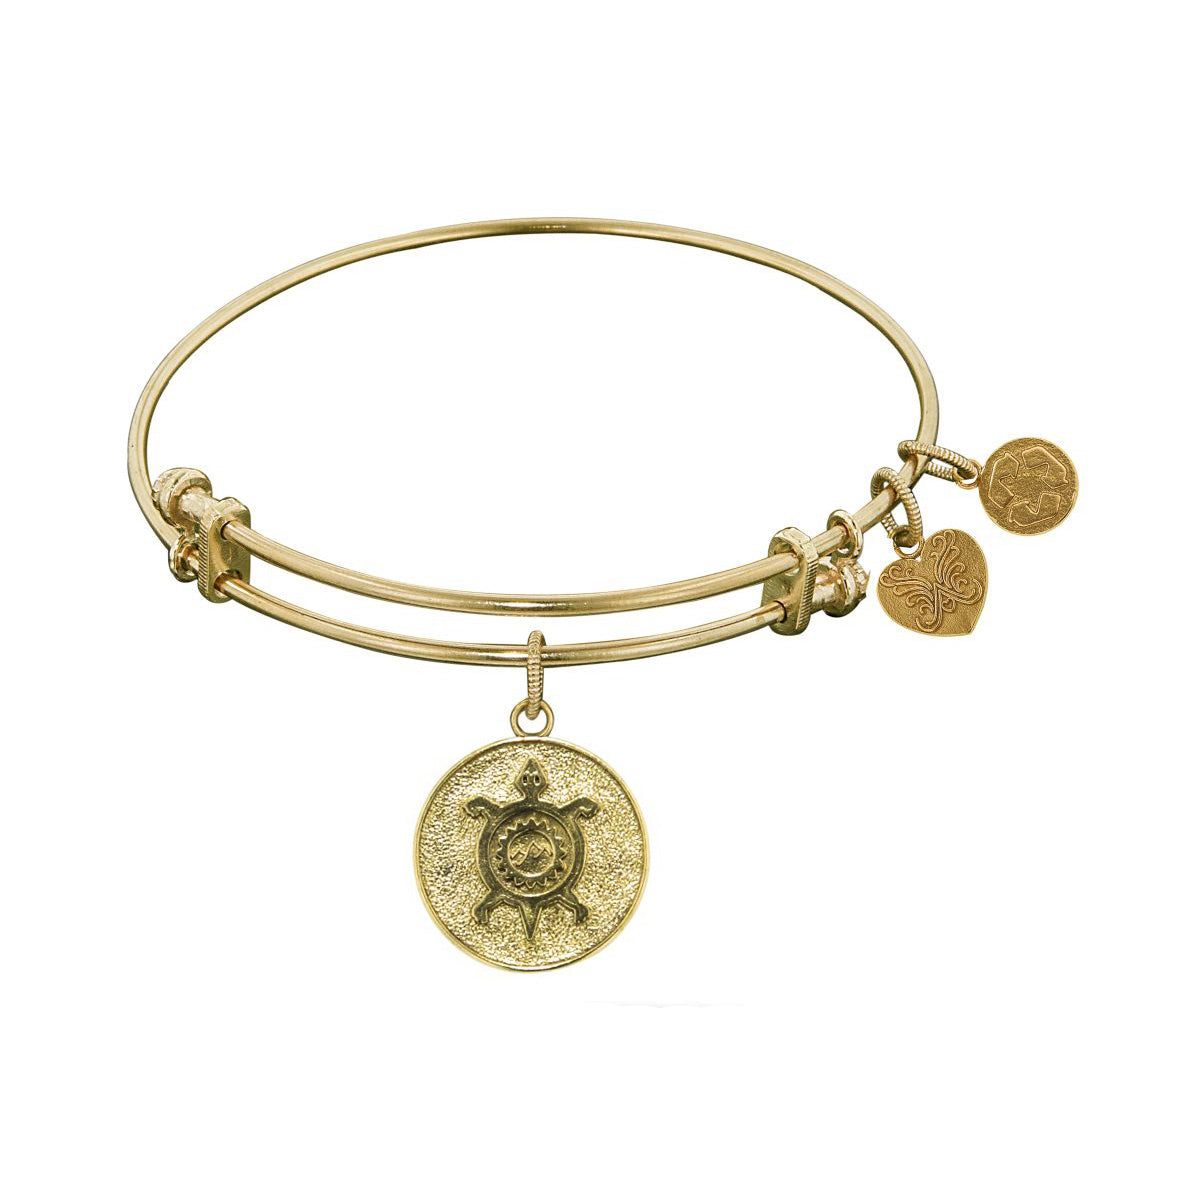 Smooth Finish Brass Longevity Turtle Angelica Bangle Bracelet, 7.25" fine designer jewelry for men and women